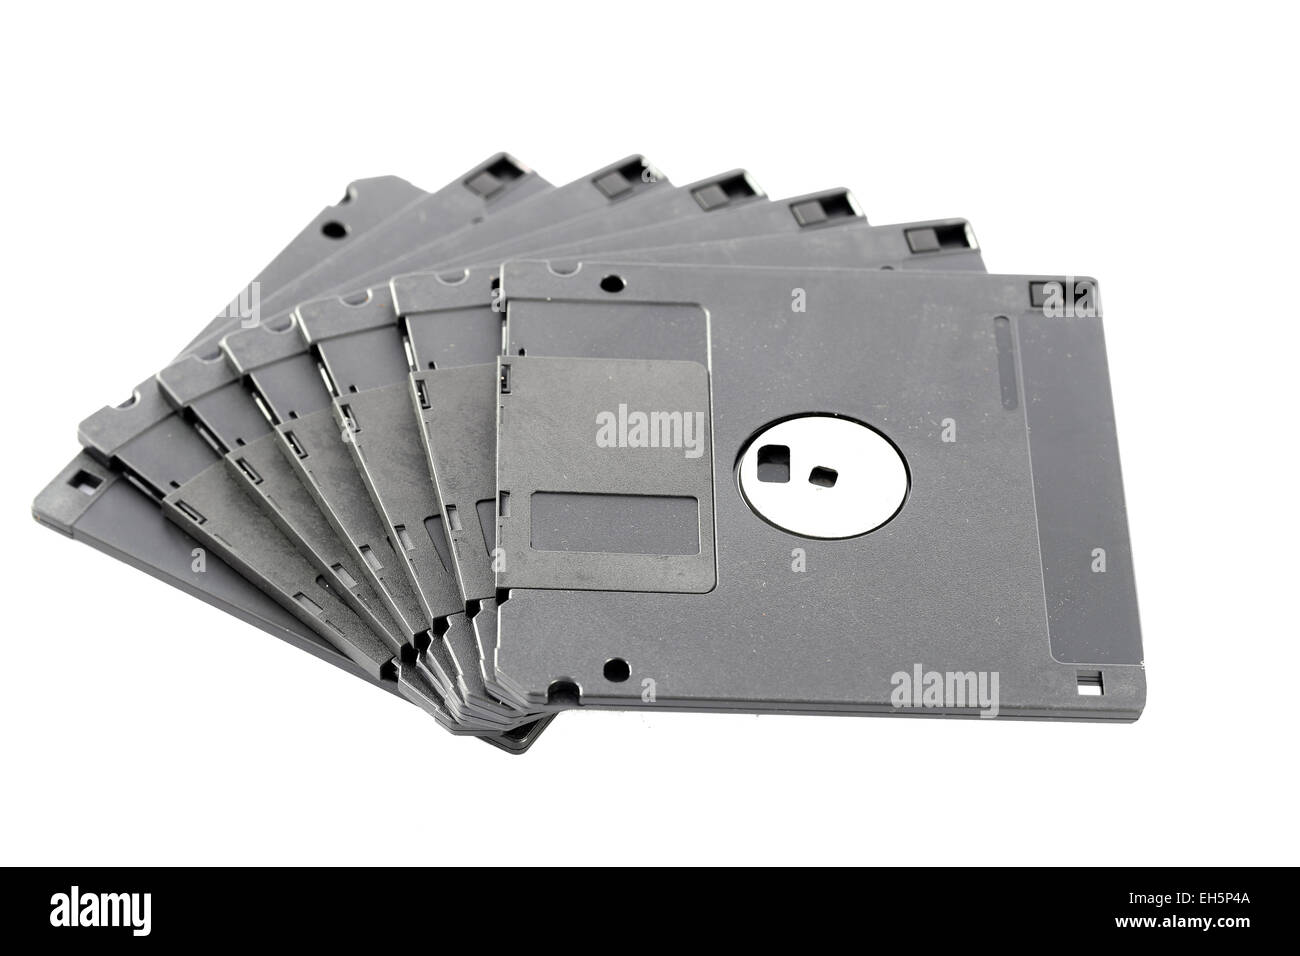 Black floppy disk isolated on white background. Stock Photo